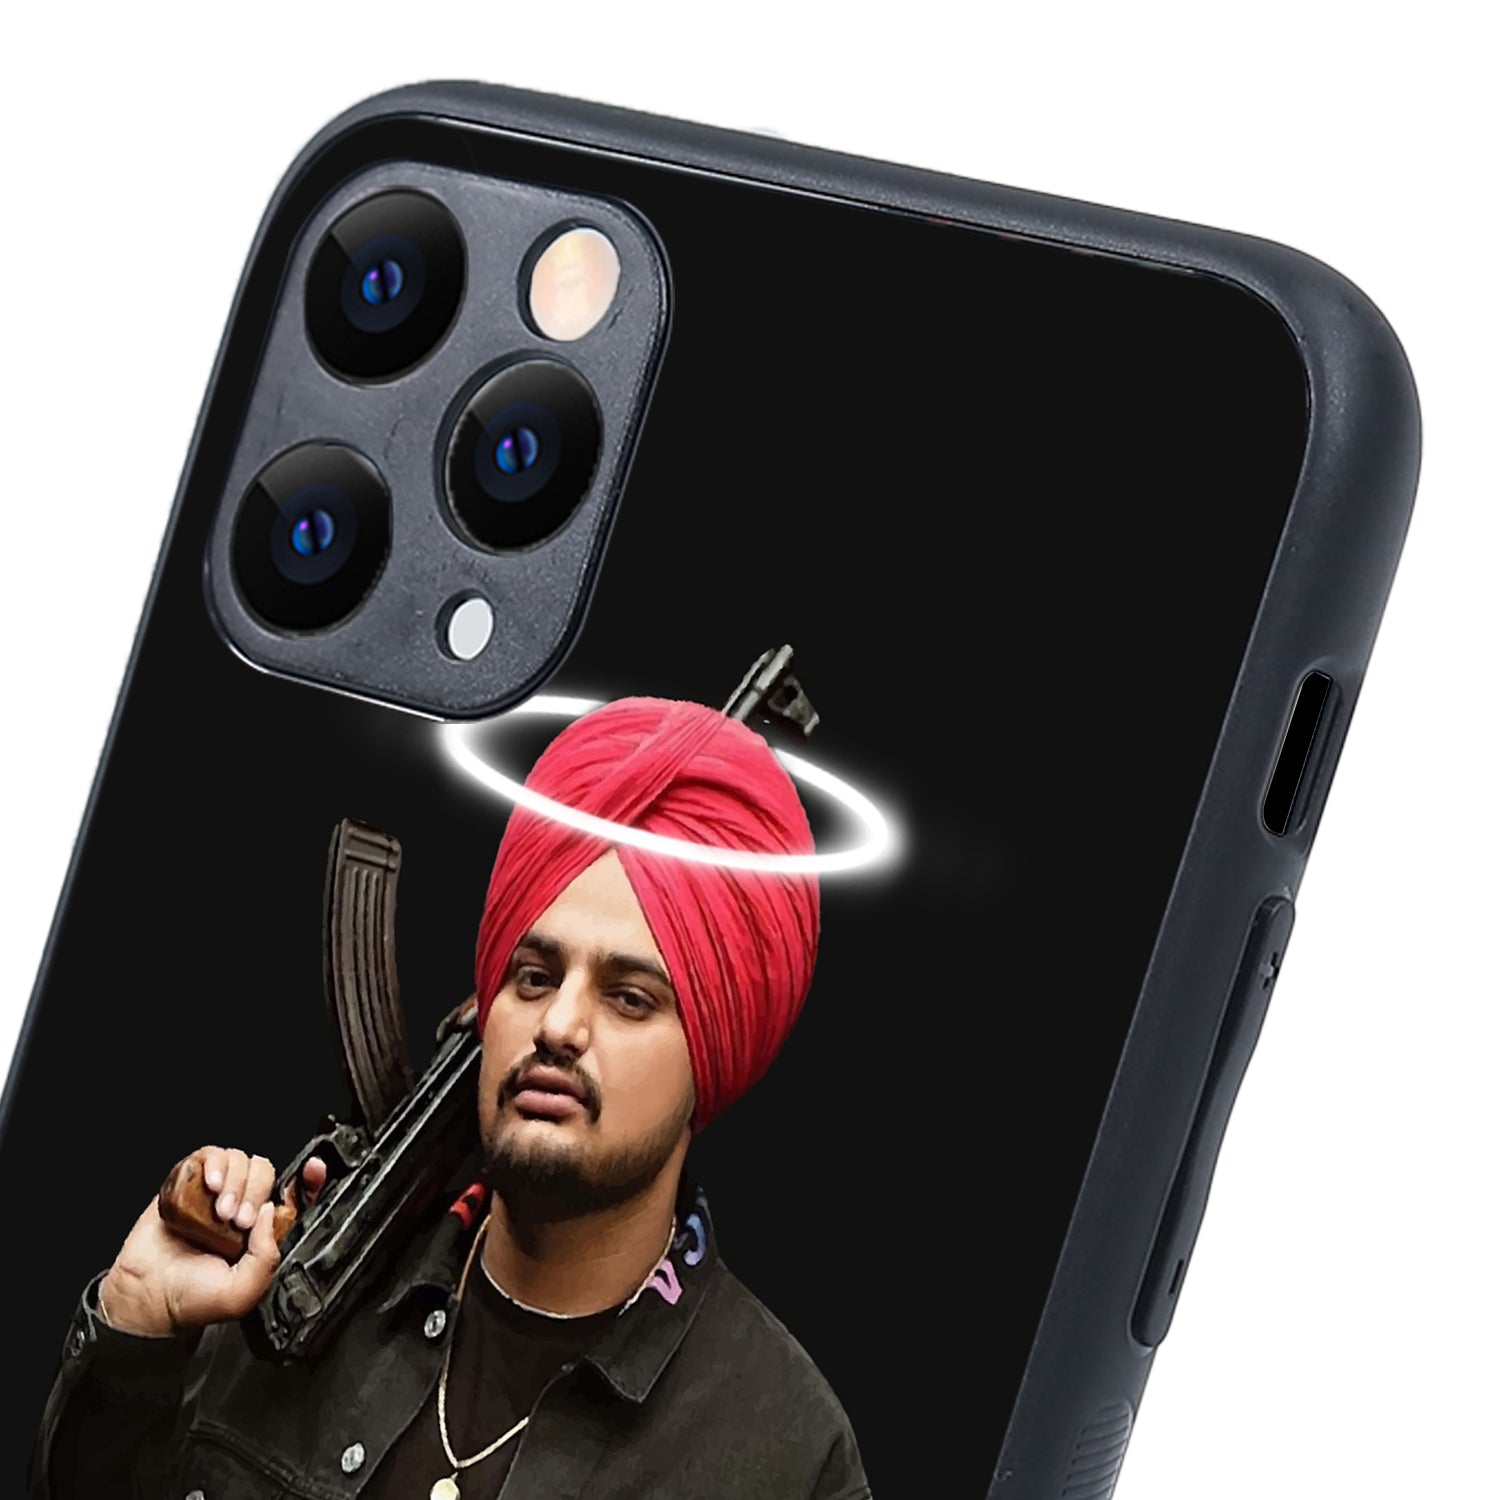 Legend 2.0 Sidhu Moosewala iPhone 11 Pro Max Case